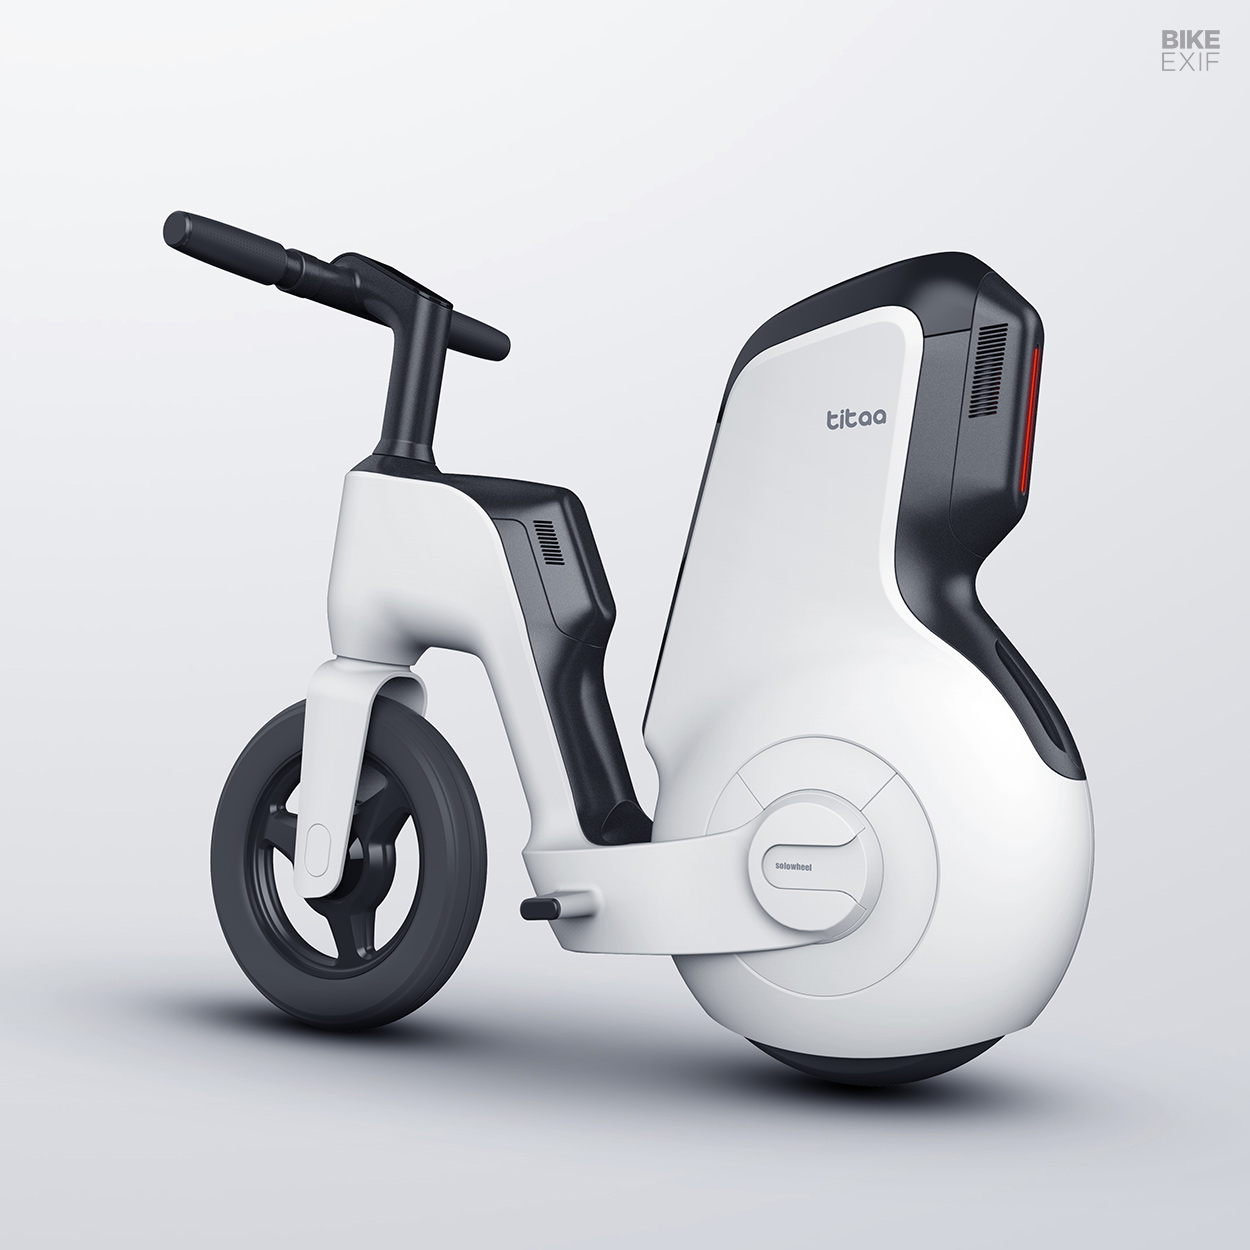 Titaa motorcycle concept by Husky Design